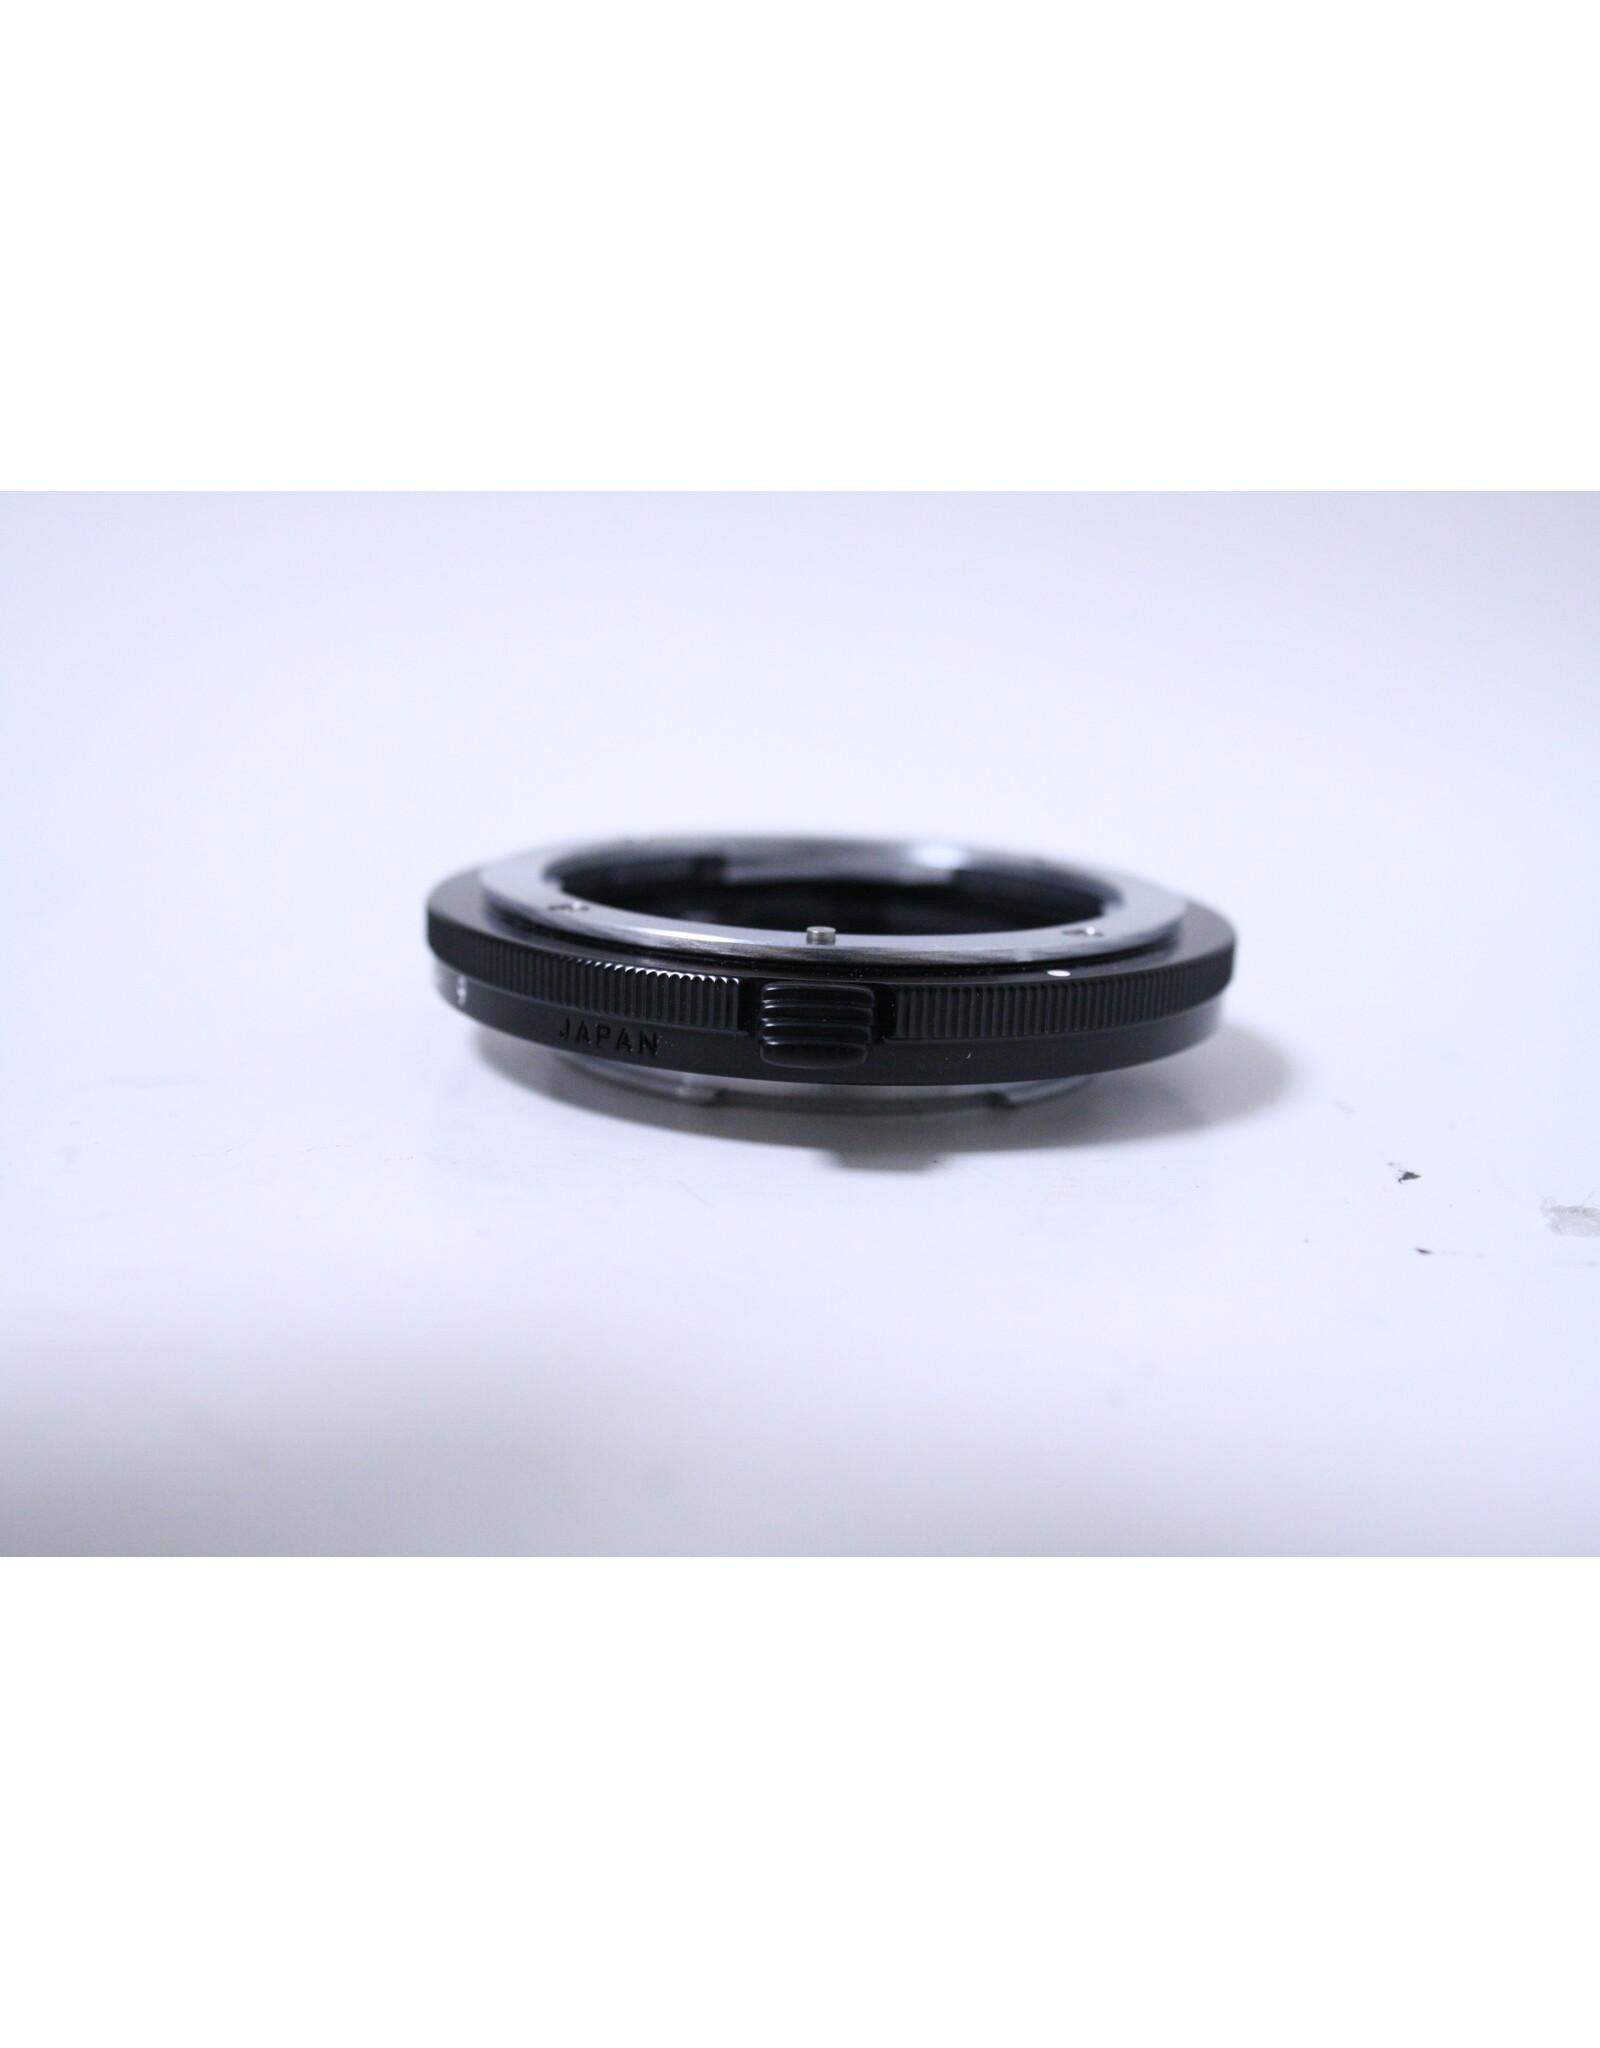 Nikon NIKON BR-4 auto double cable release ring for focusing bellows attachment